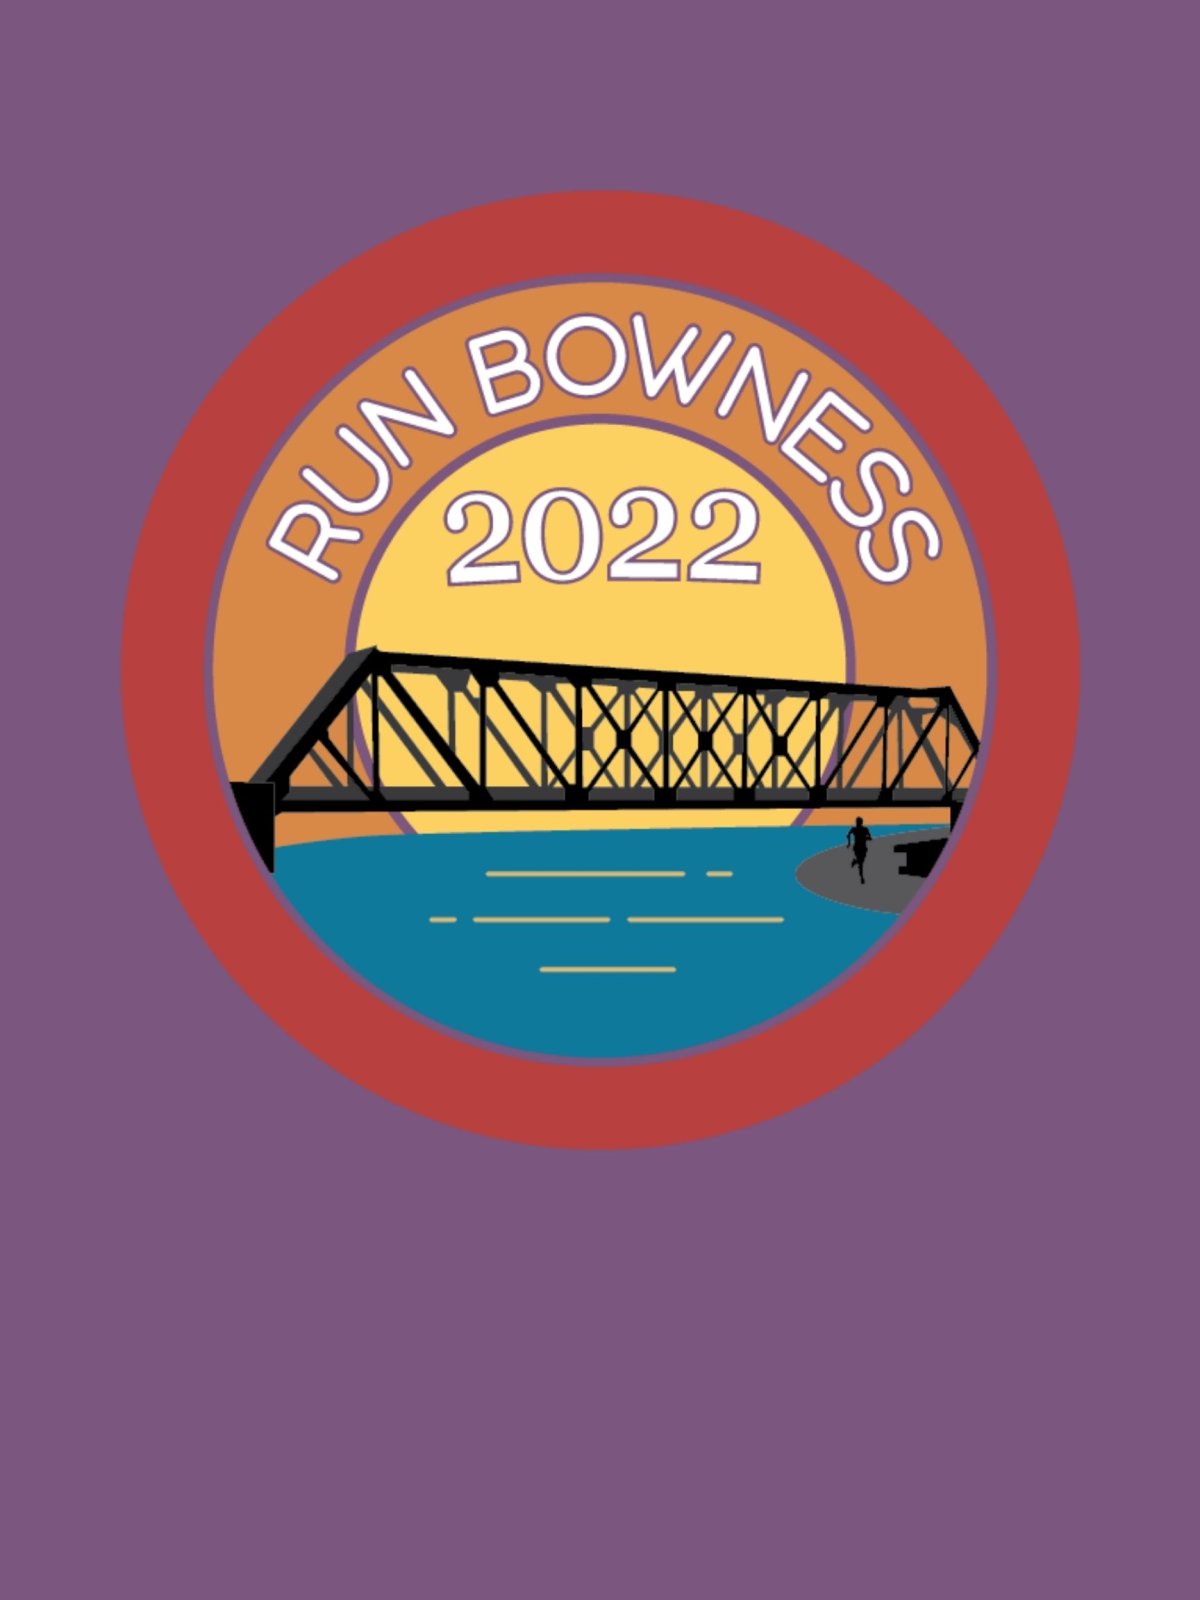 Run Bowness 2022 - image